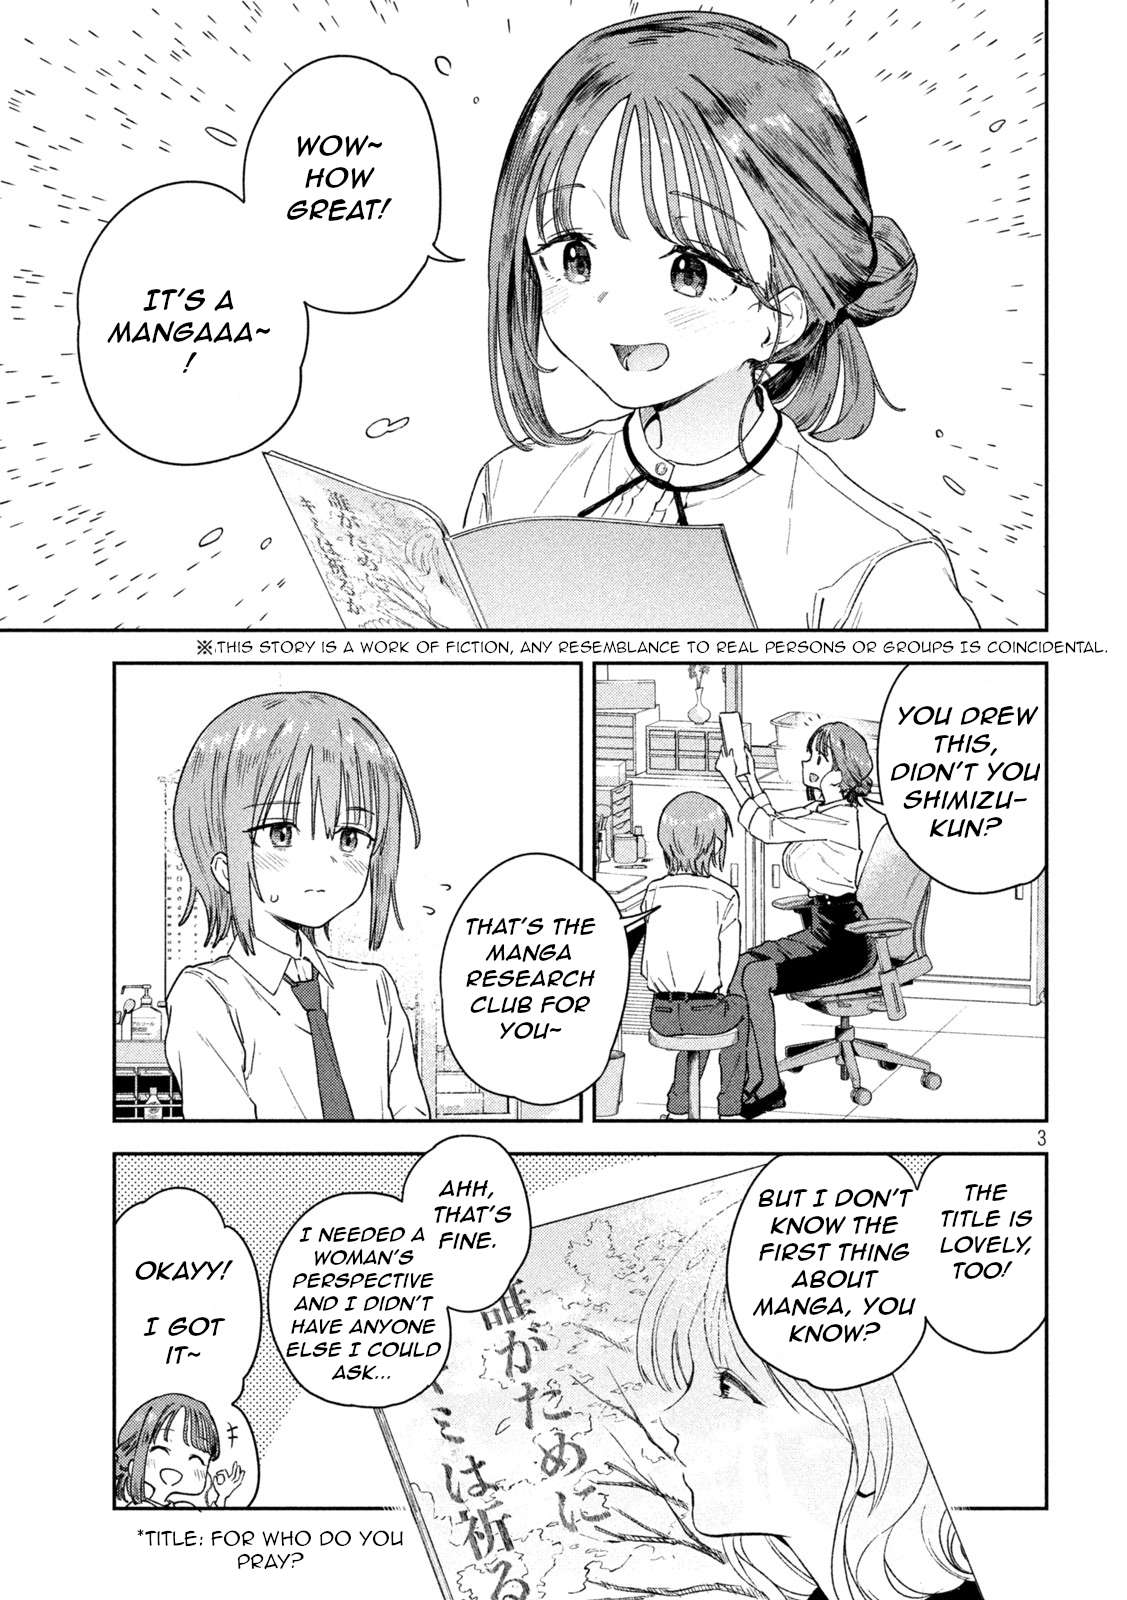 Miyo-Chan Sensei Said So - chapter 3 - #4